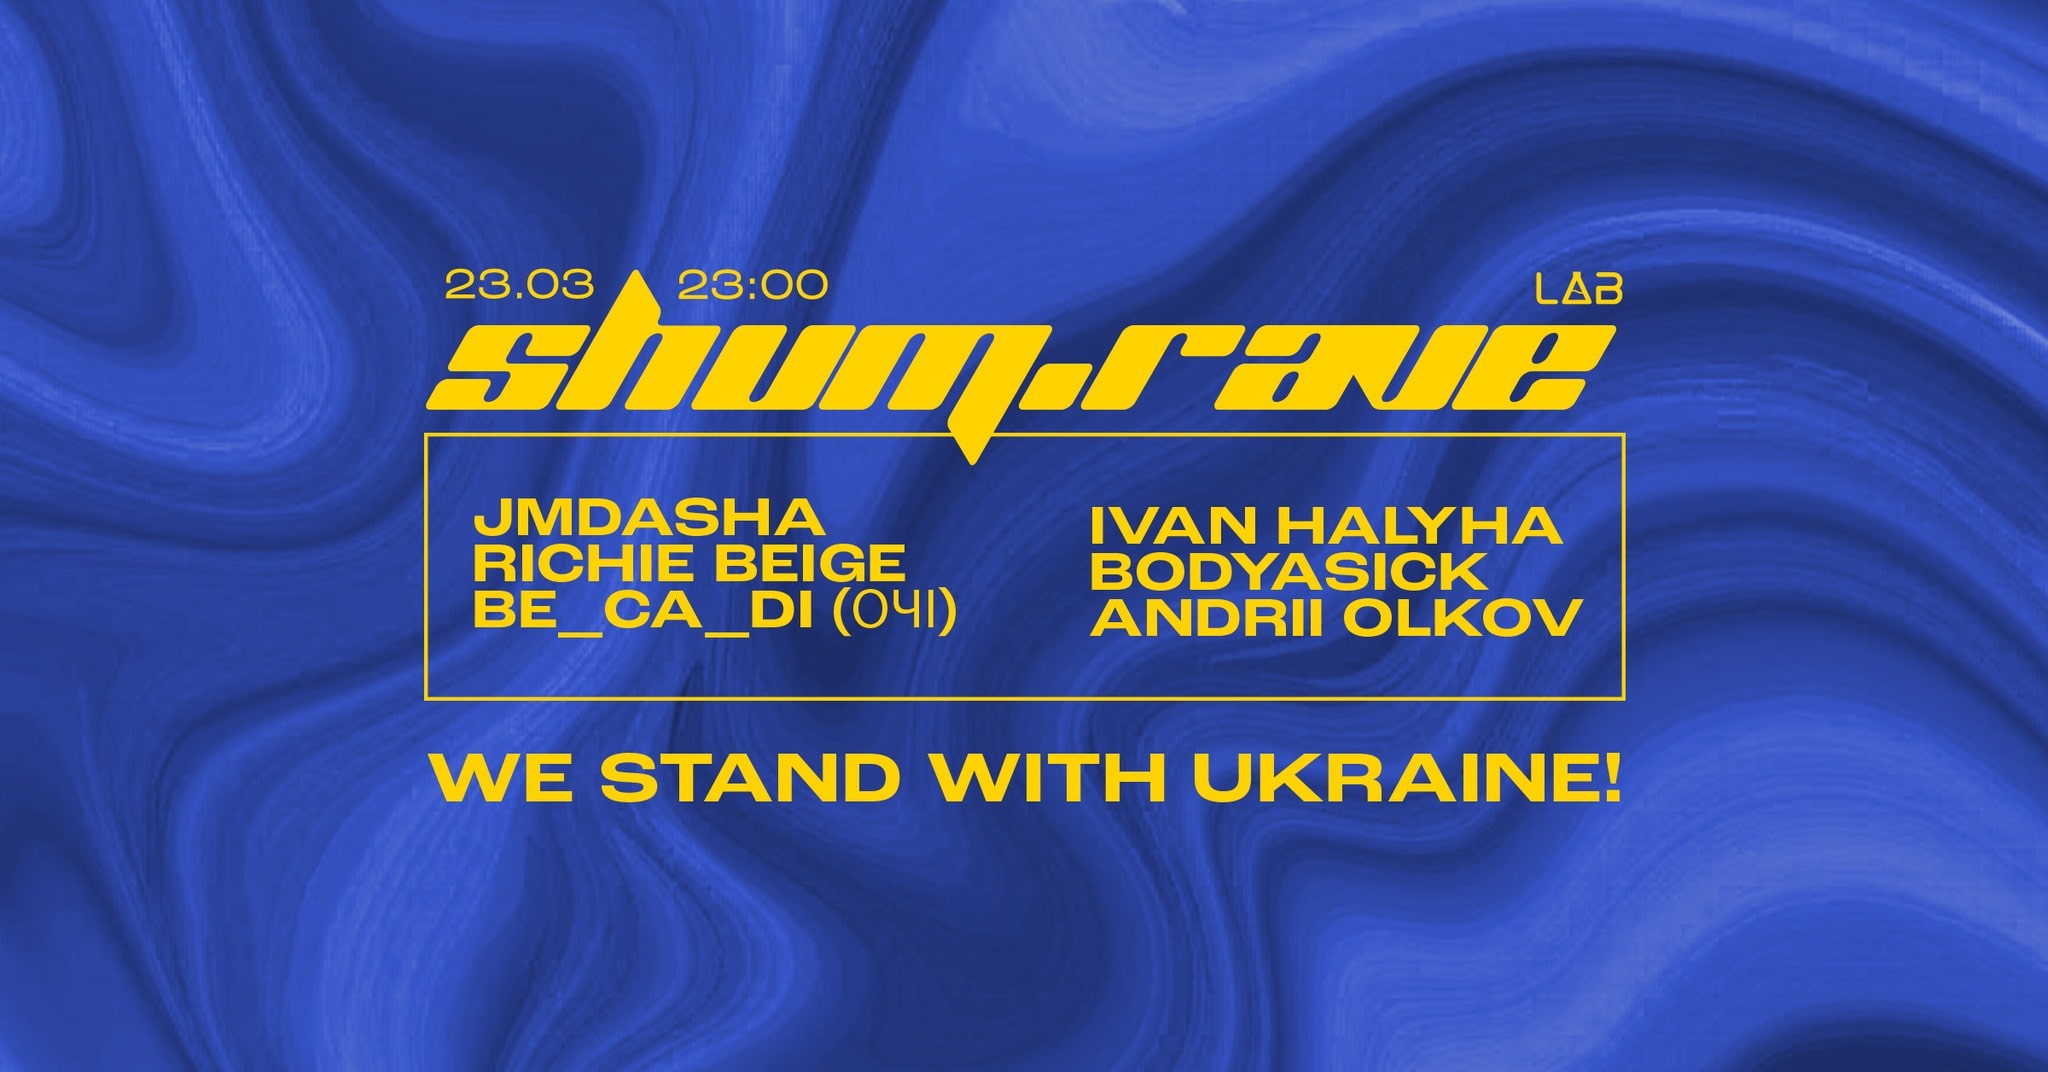 We stand with Ukraine! / impreza charytatywna